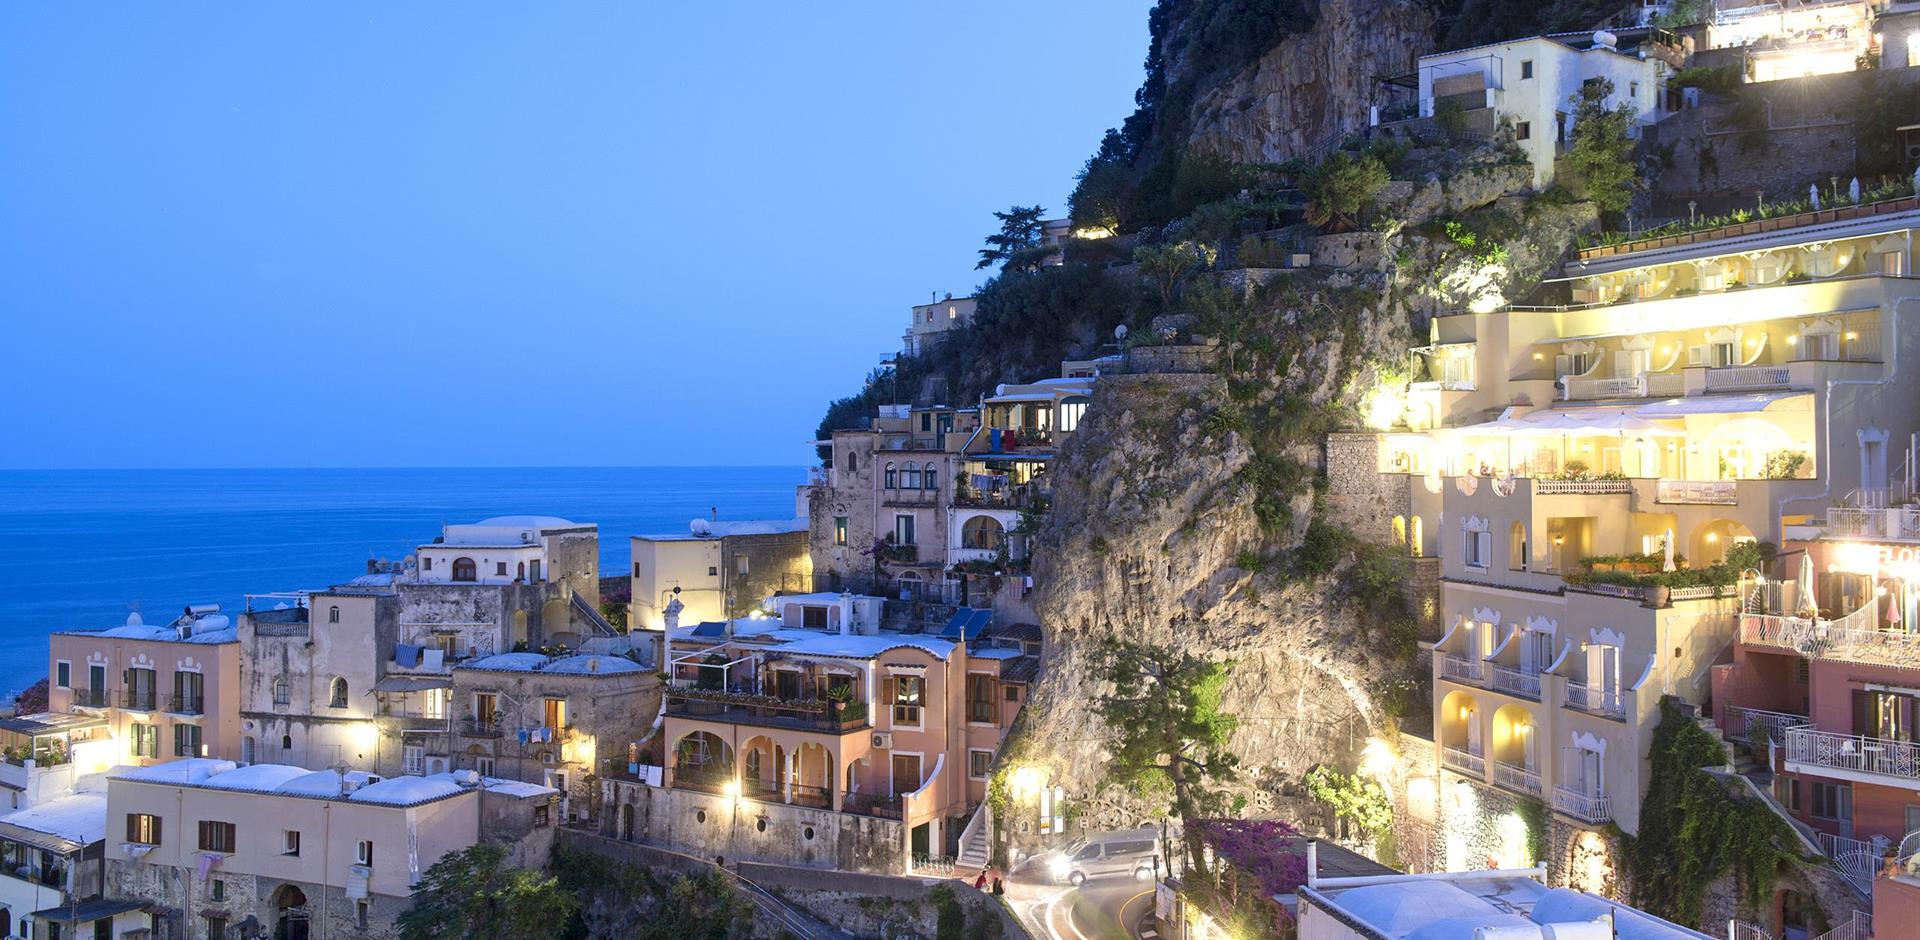 Amalfi & Positano. France